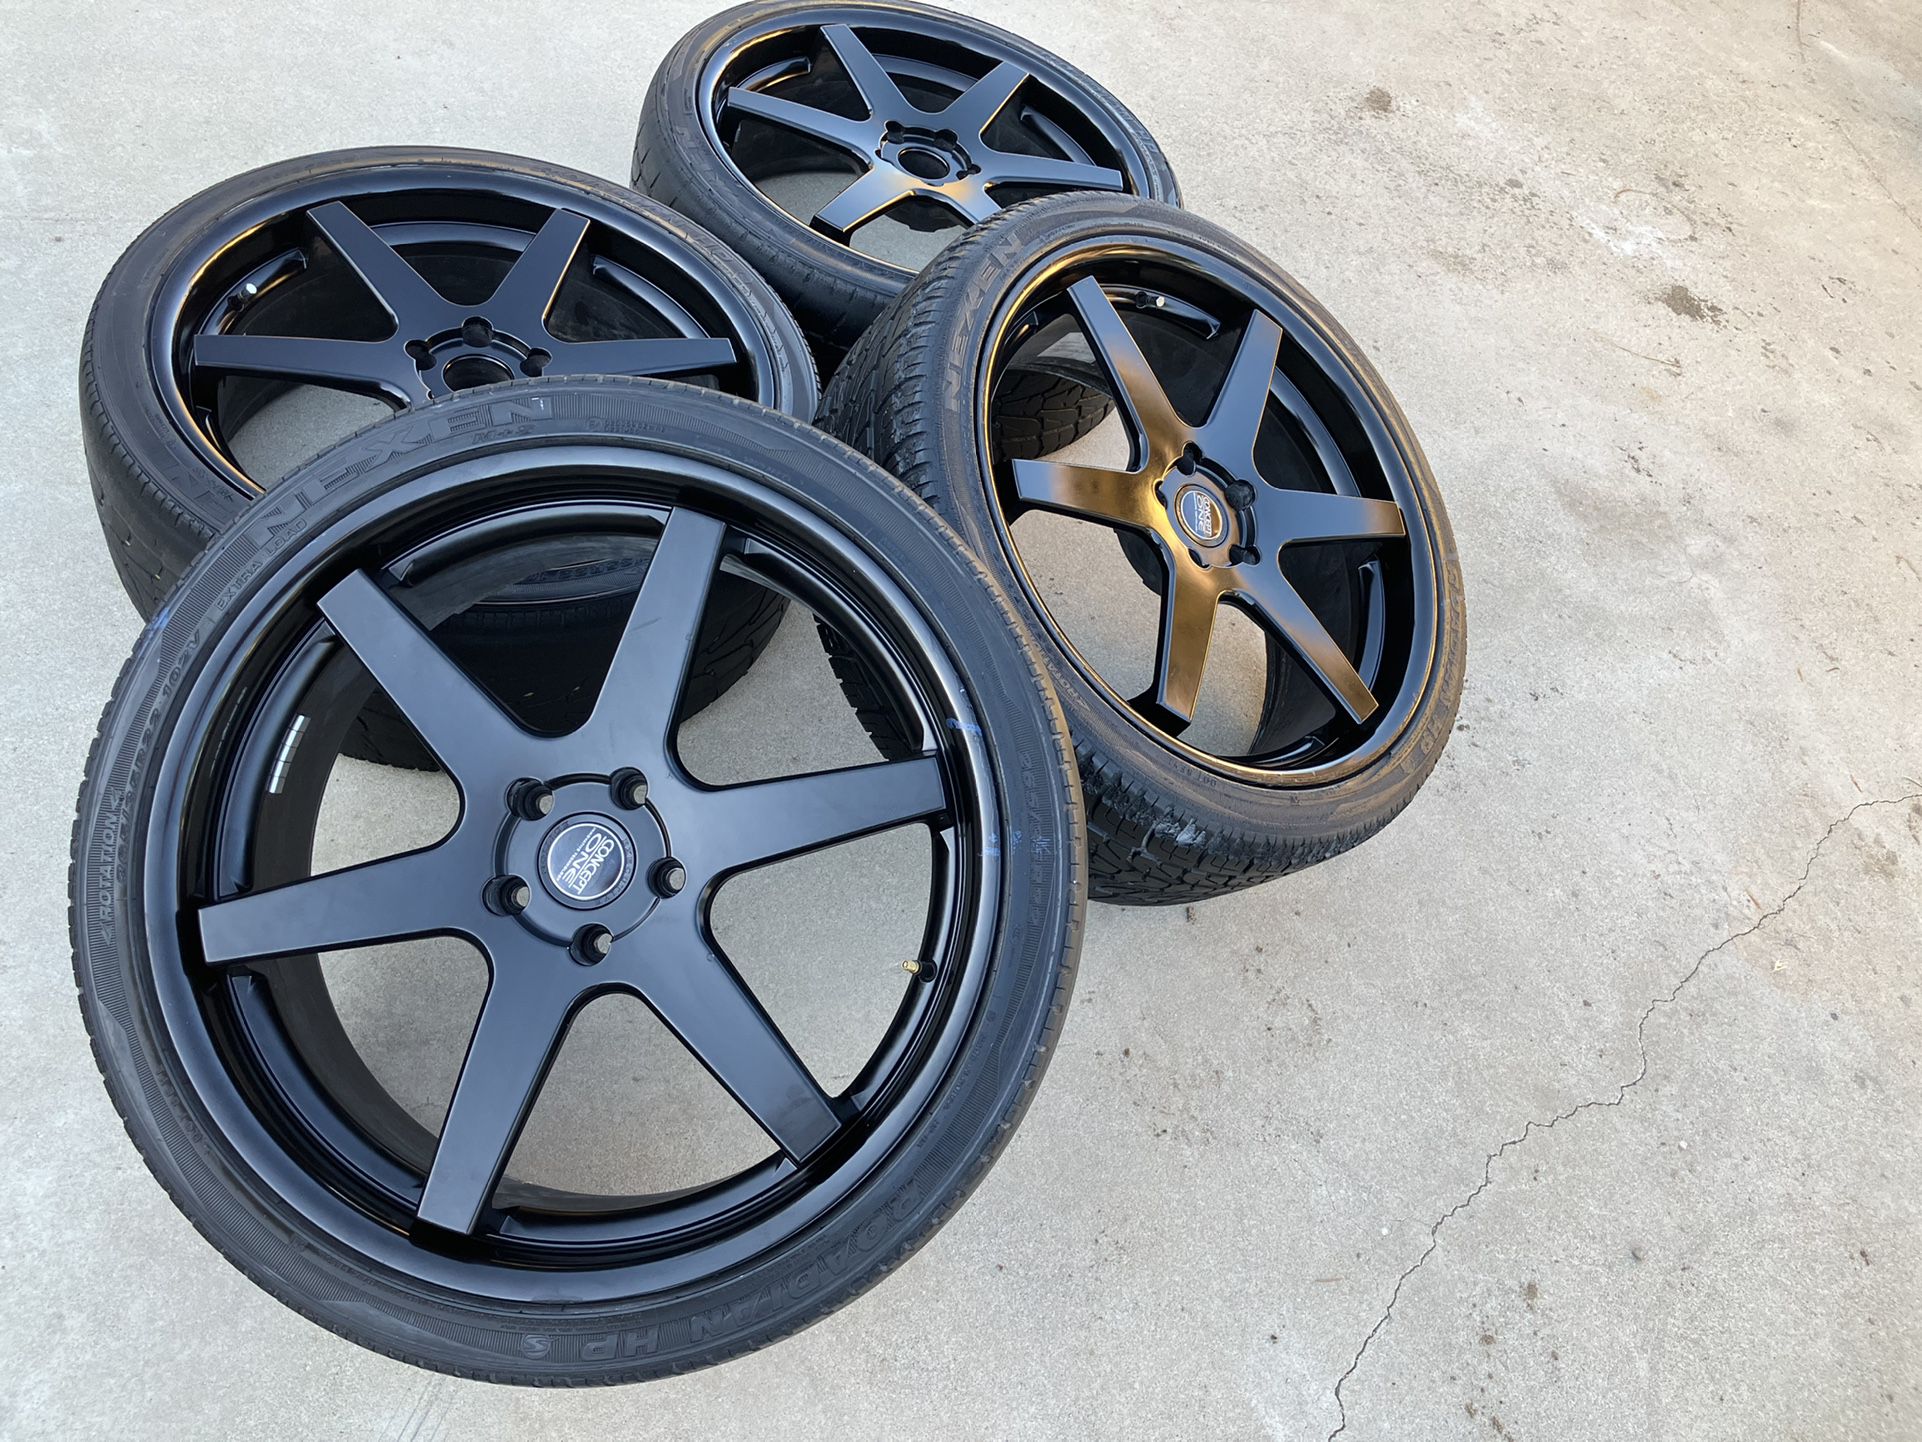 Rims 22 Black Wheels 5x120 For BMW Chevrolet Camaro Riviera S10 Cadillac ATS Cts Xts 